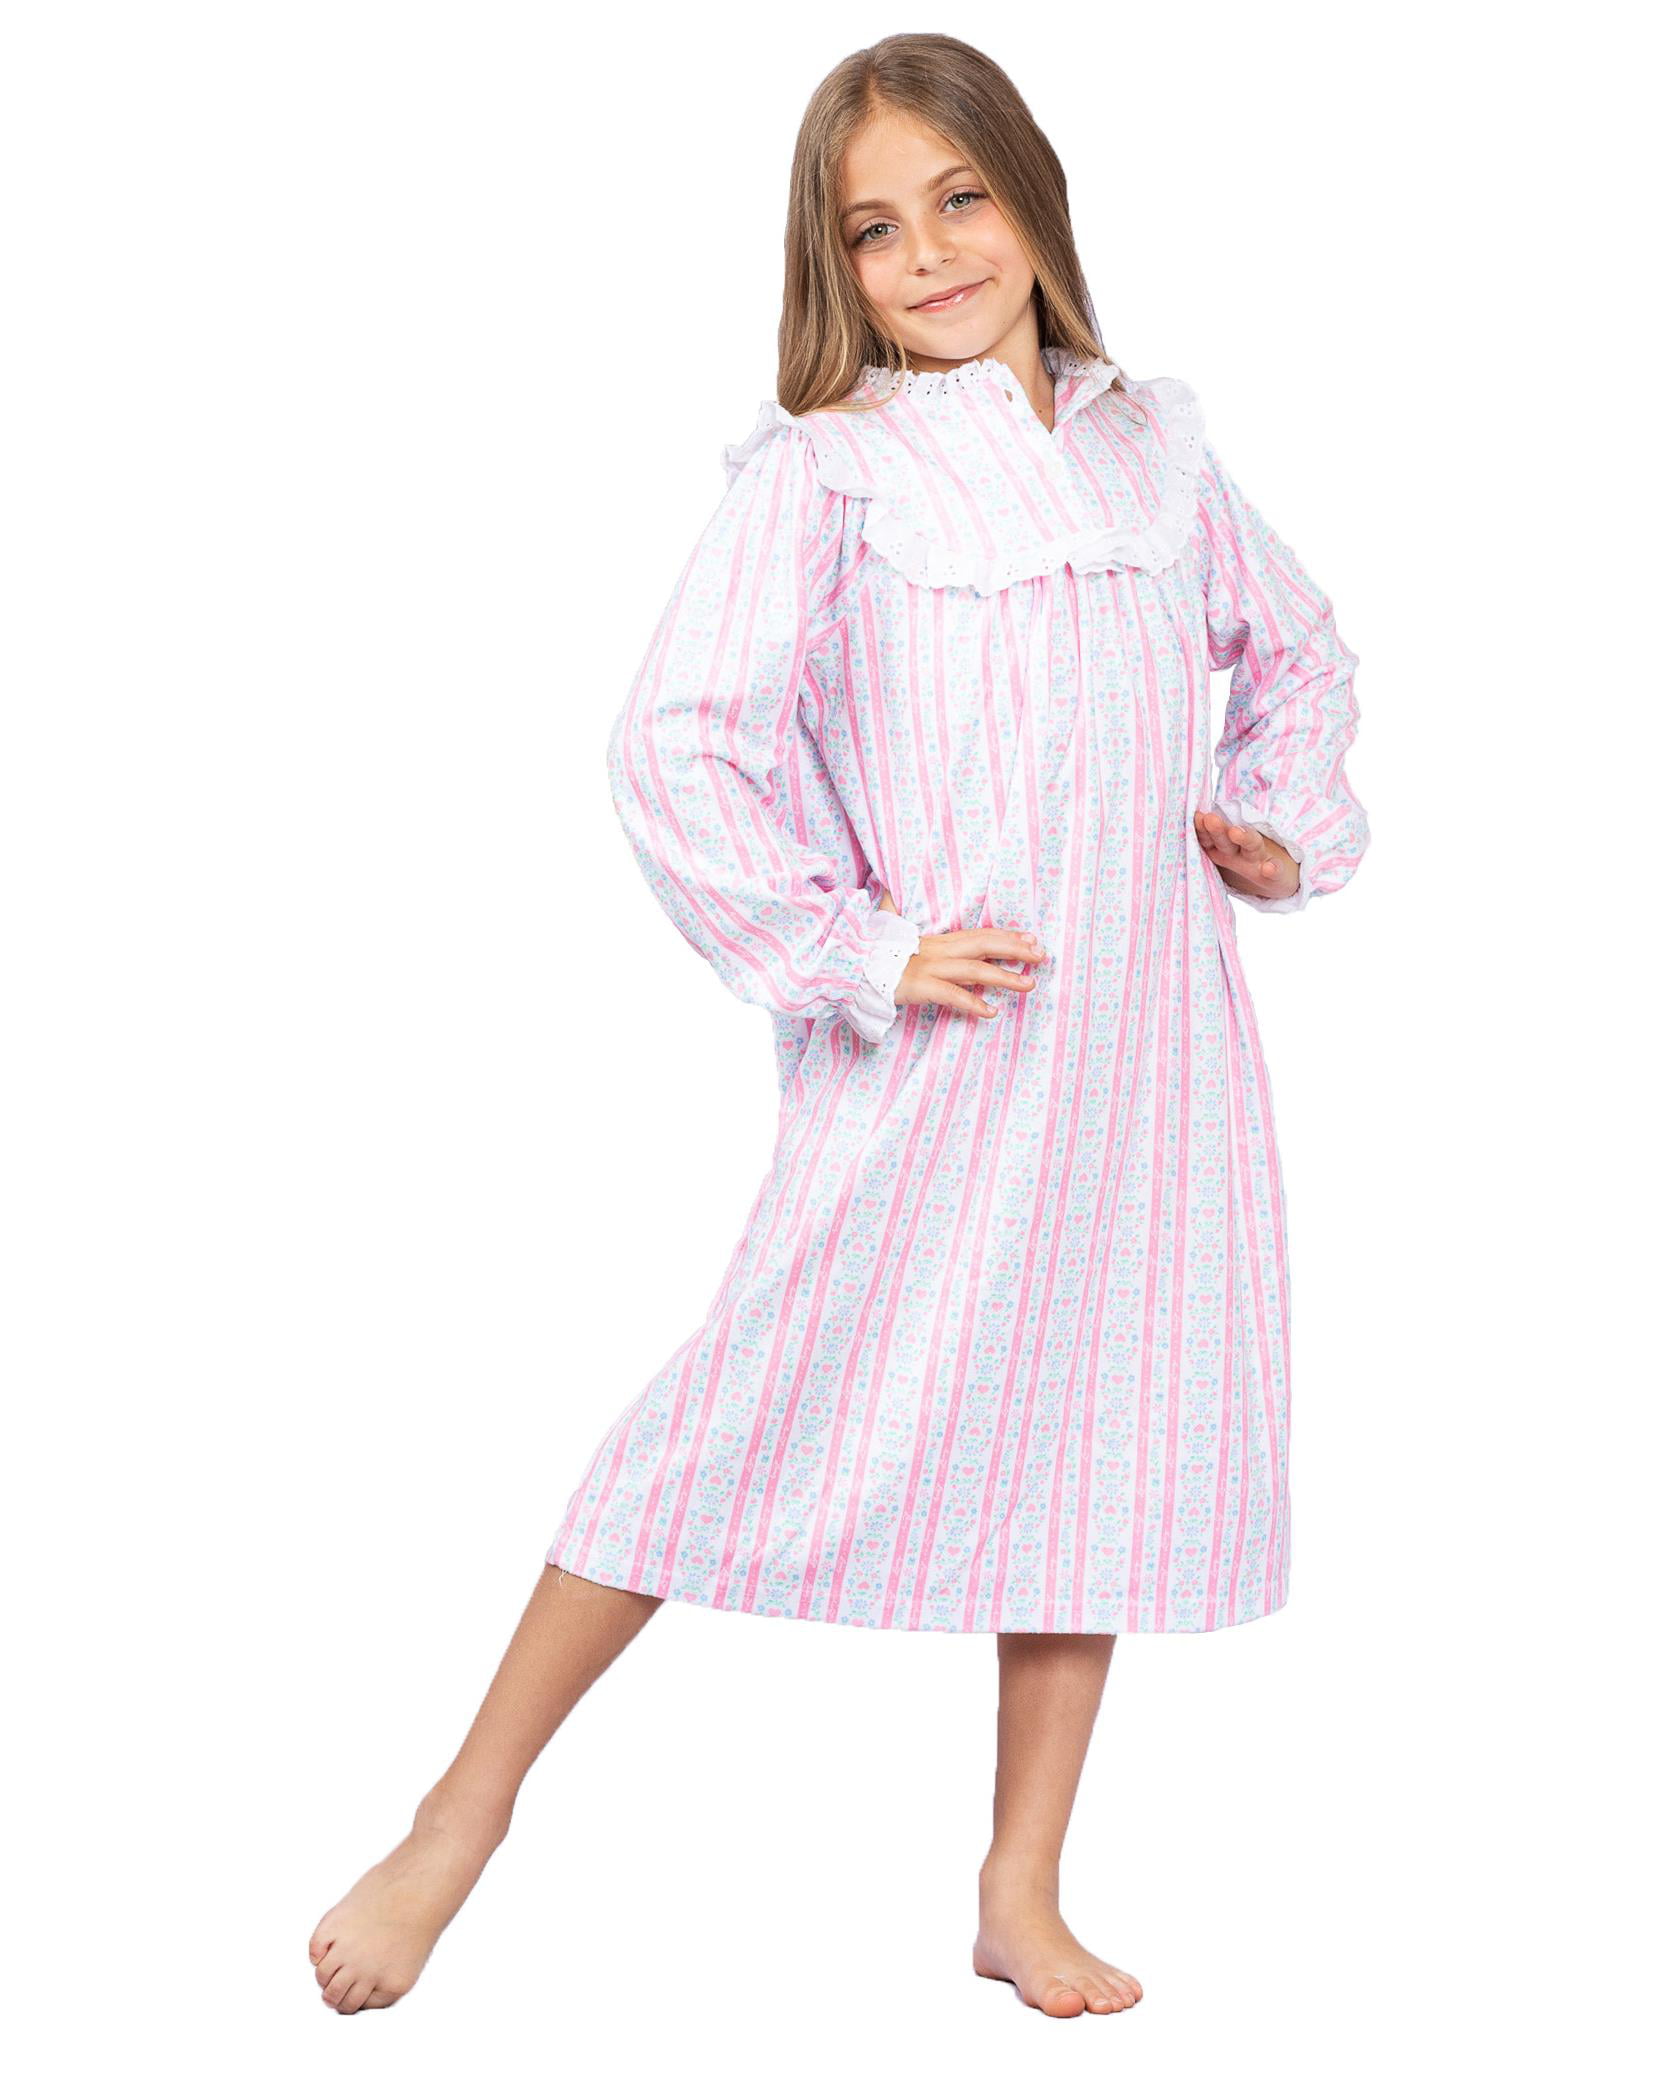 North 15 Girls Super Cozy Mink Fleece Holiday Print Pajama Pants 7-14 